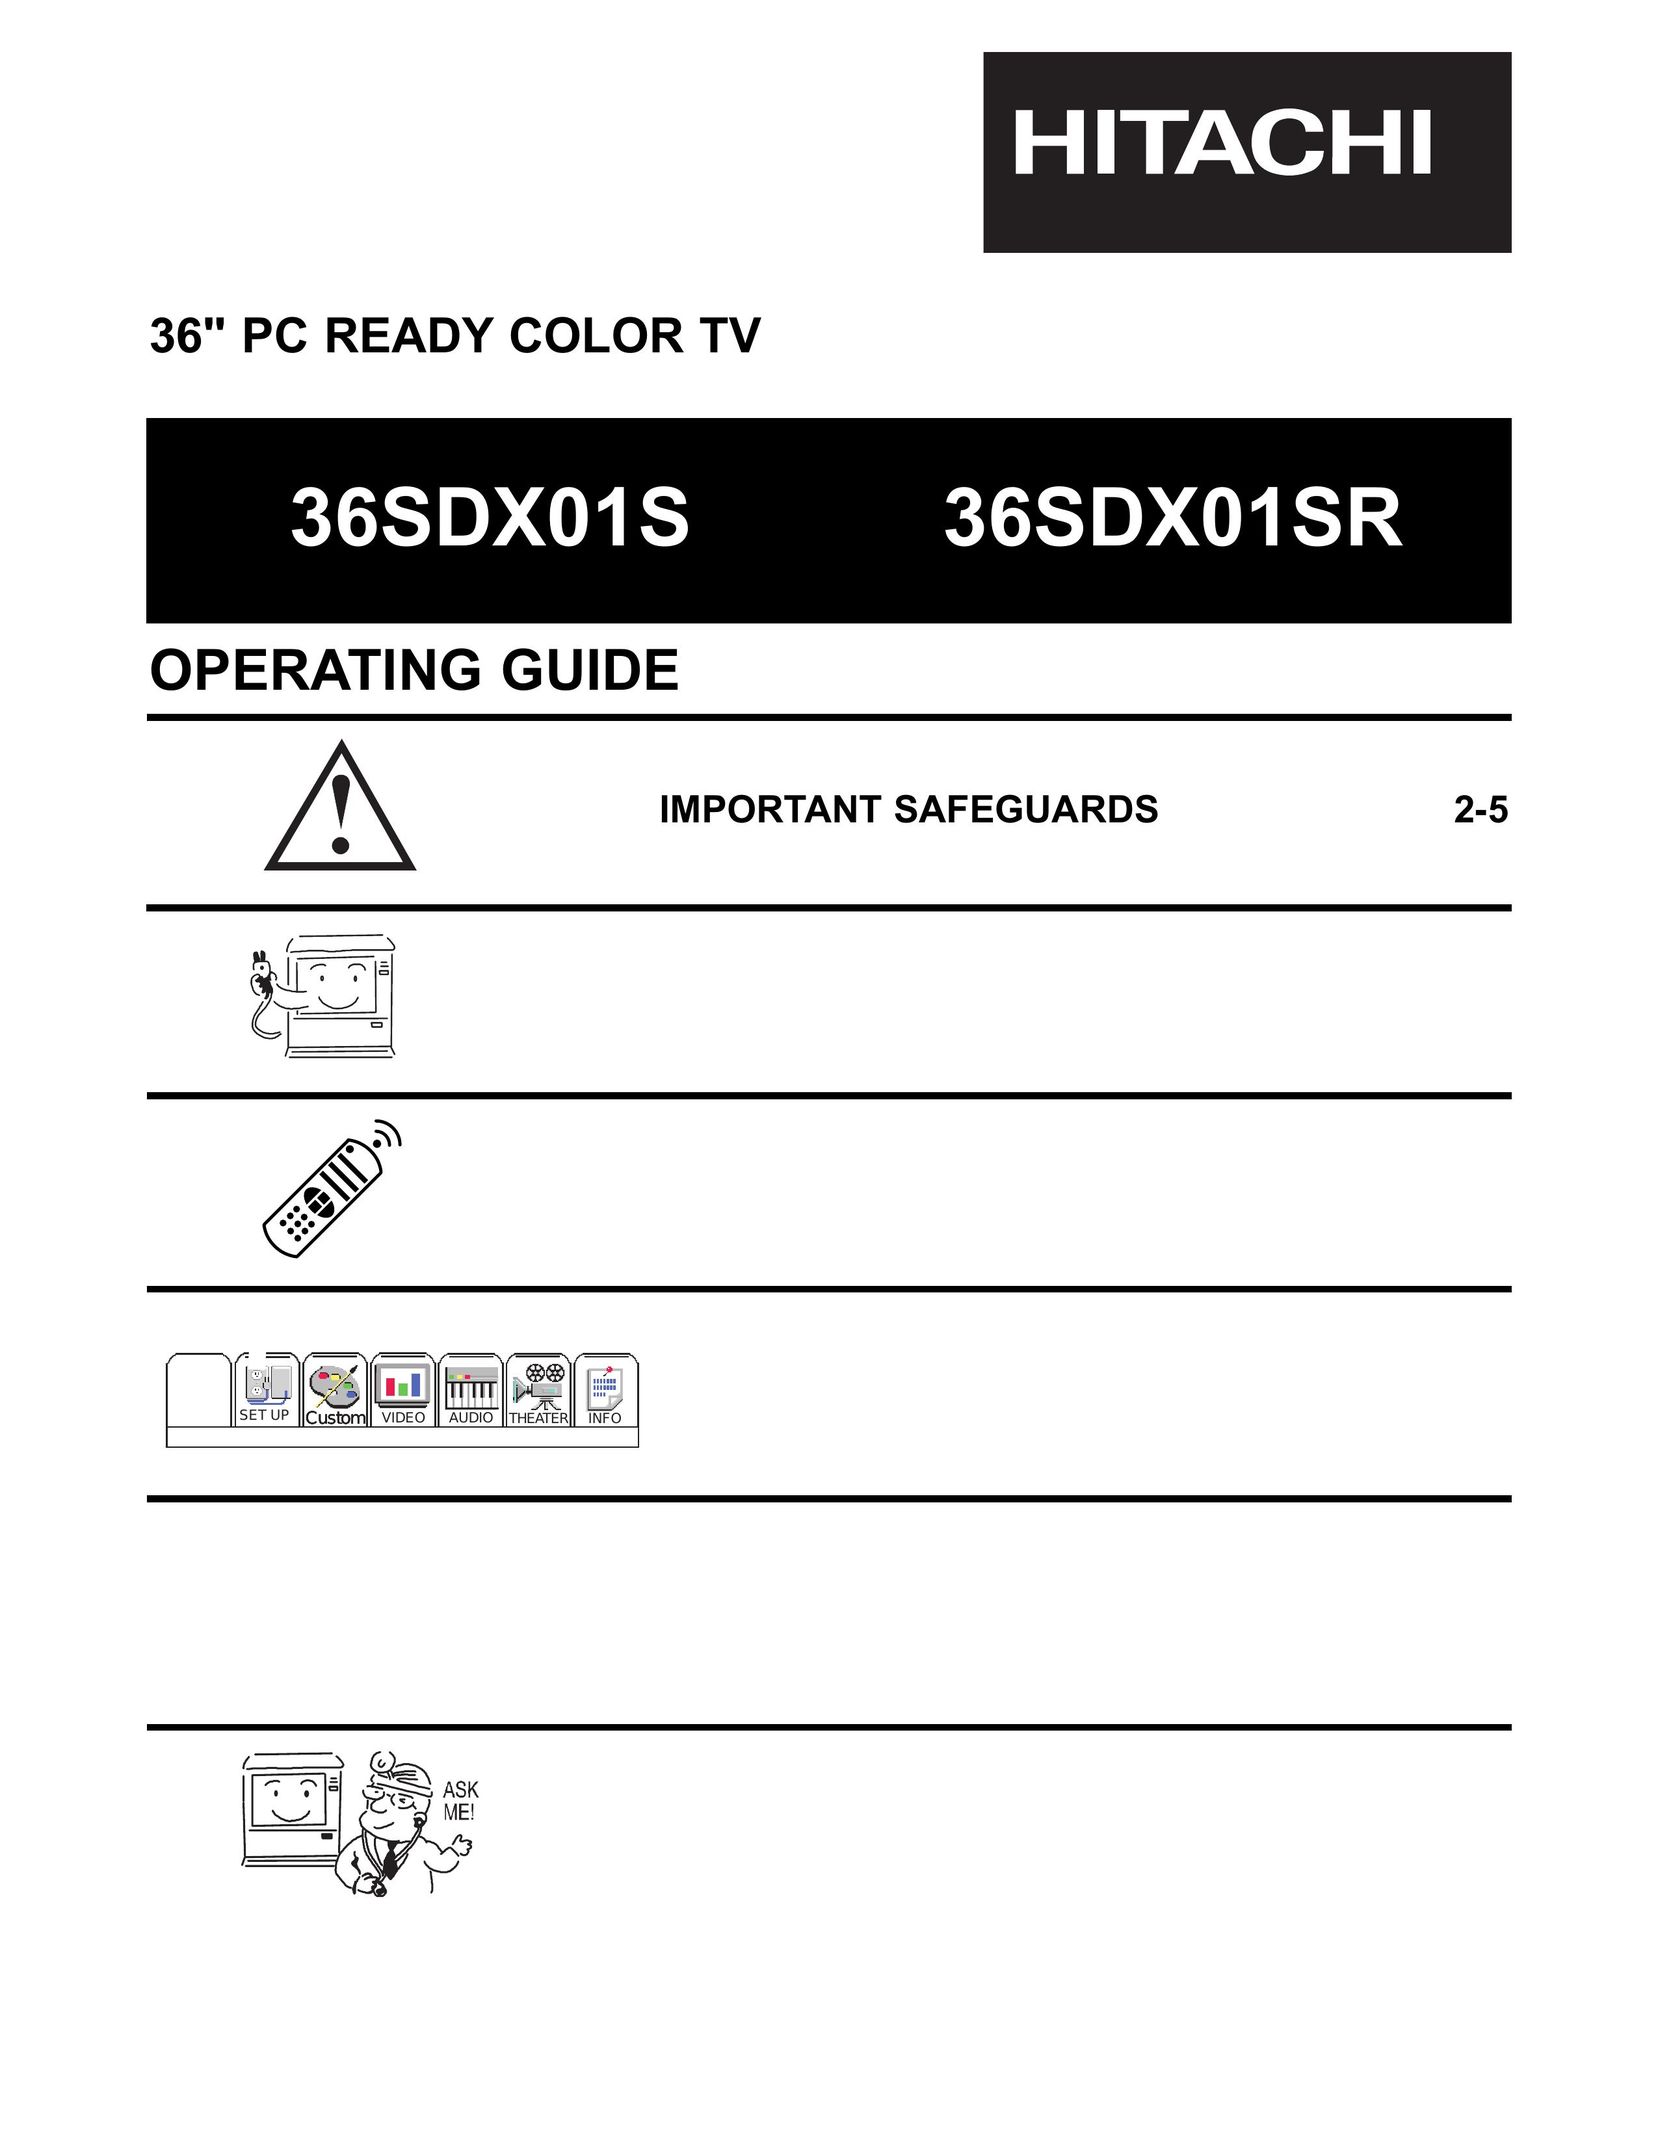 Hitachi 36SDX01SR CRT Television User Manual